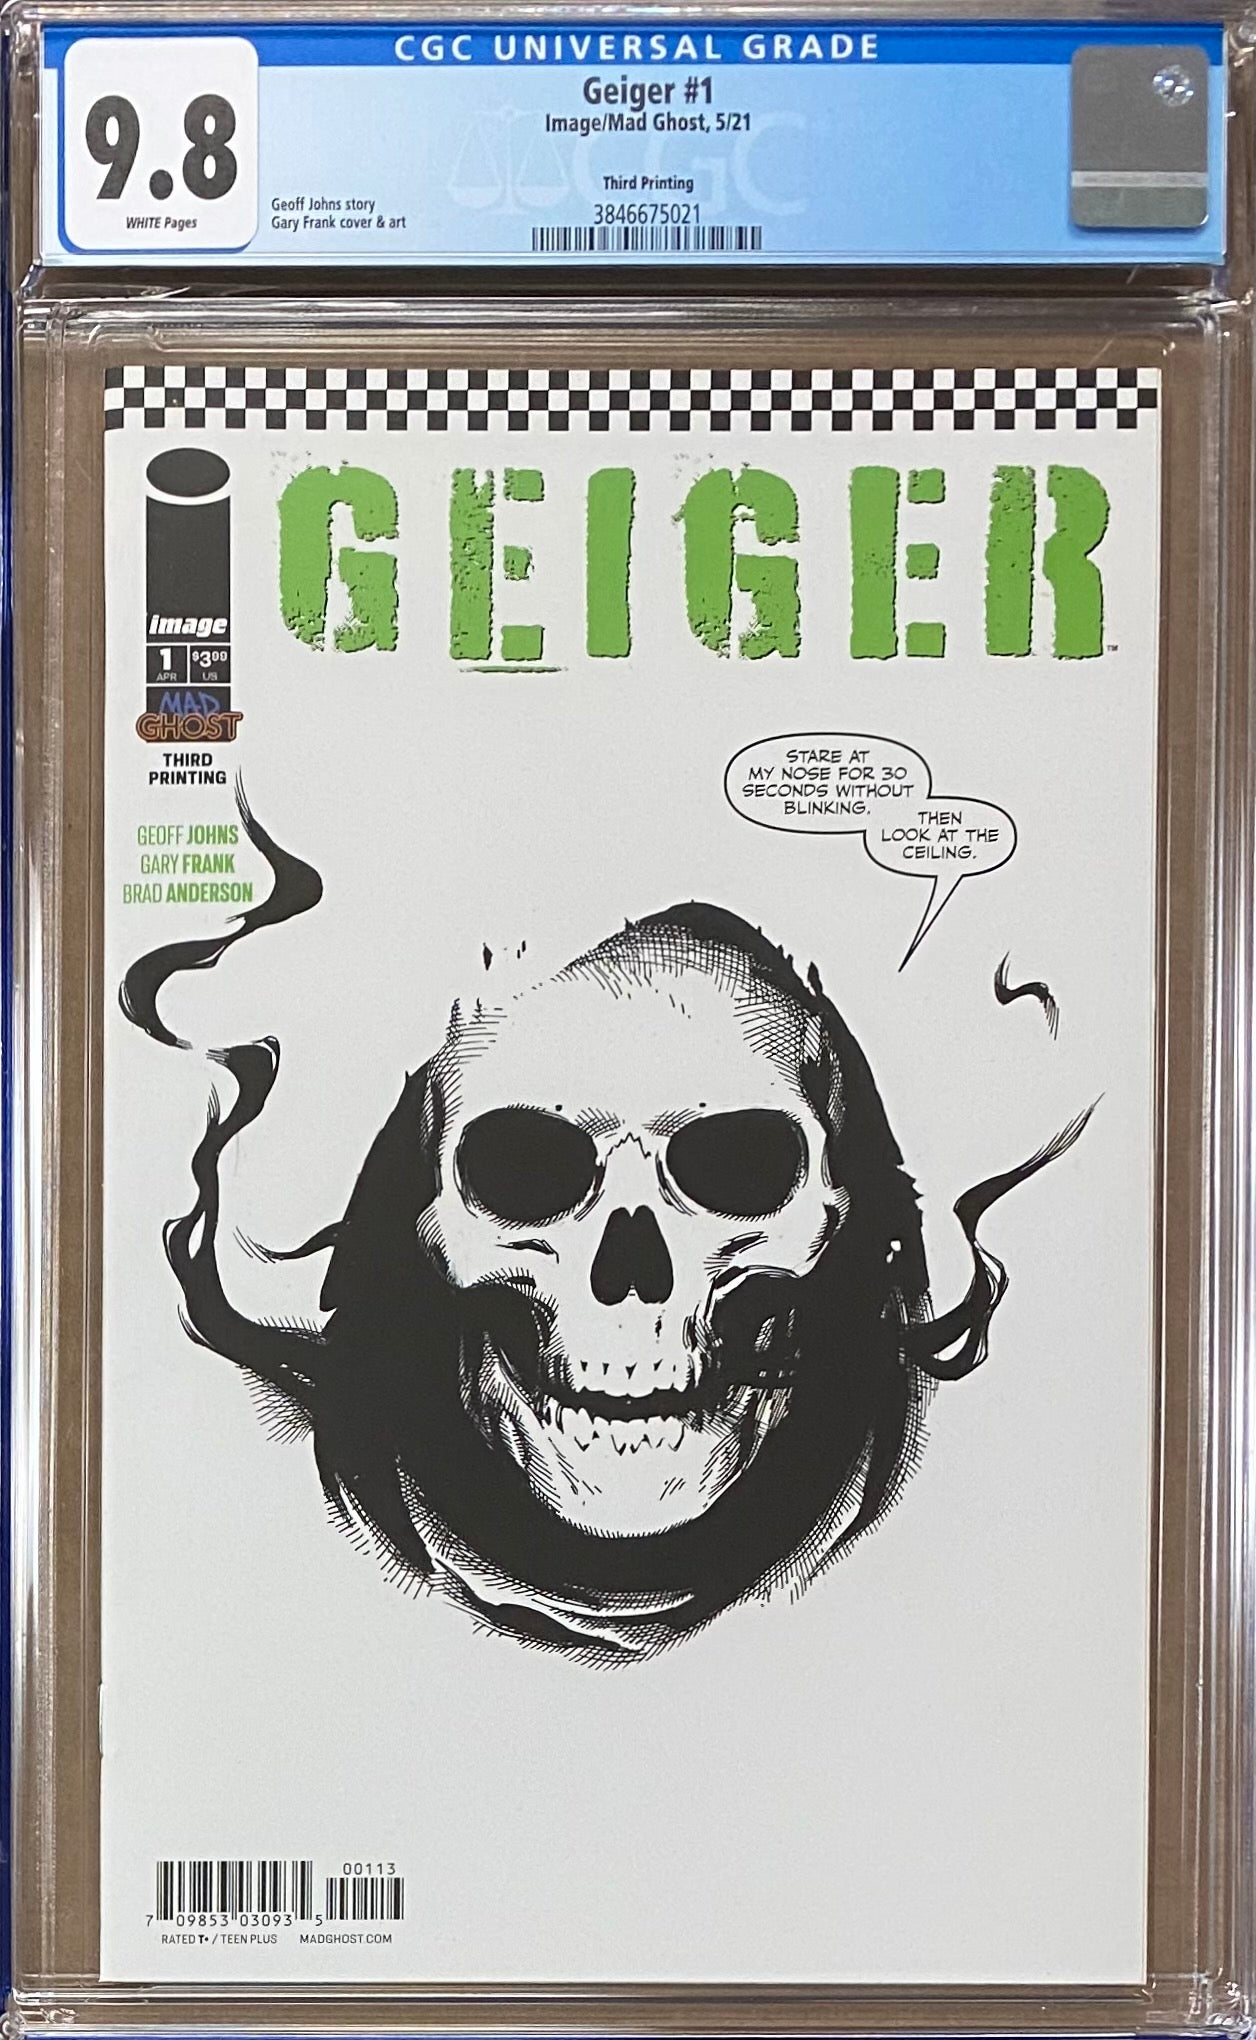 Geiger #1 Third Printing CGC 9.8